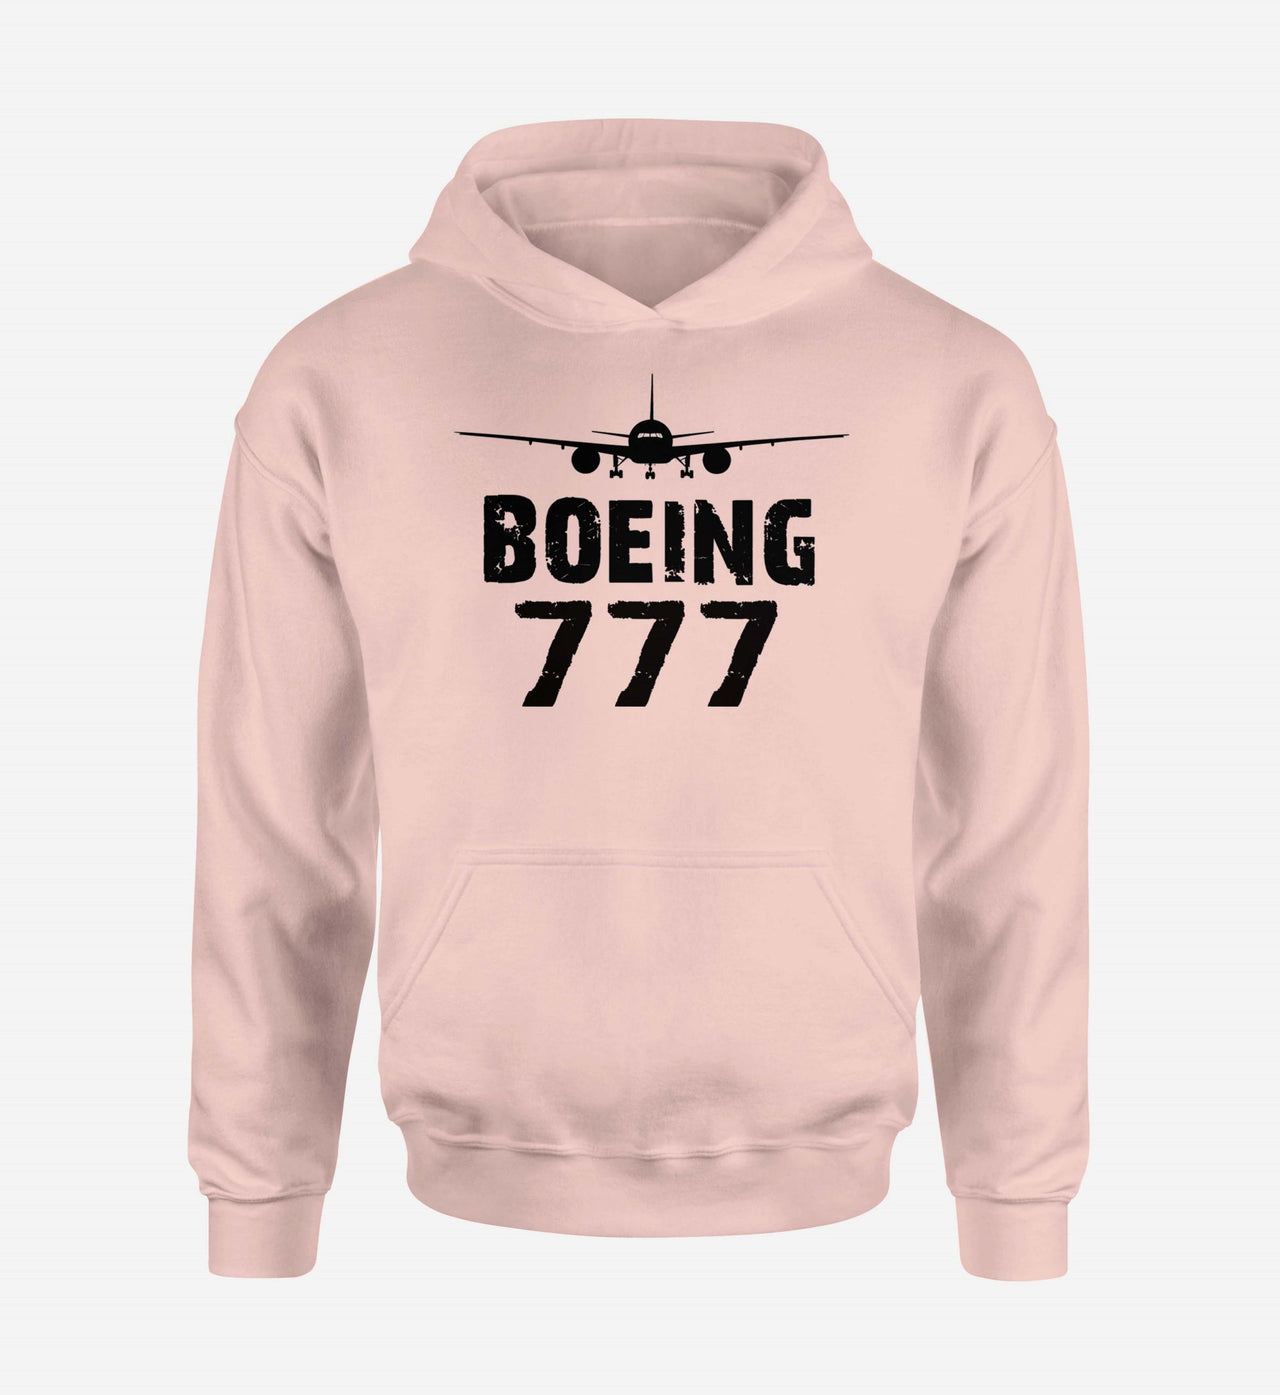 Boeing 777 & Plane Designed Hoodies